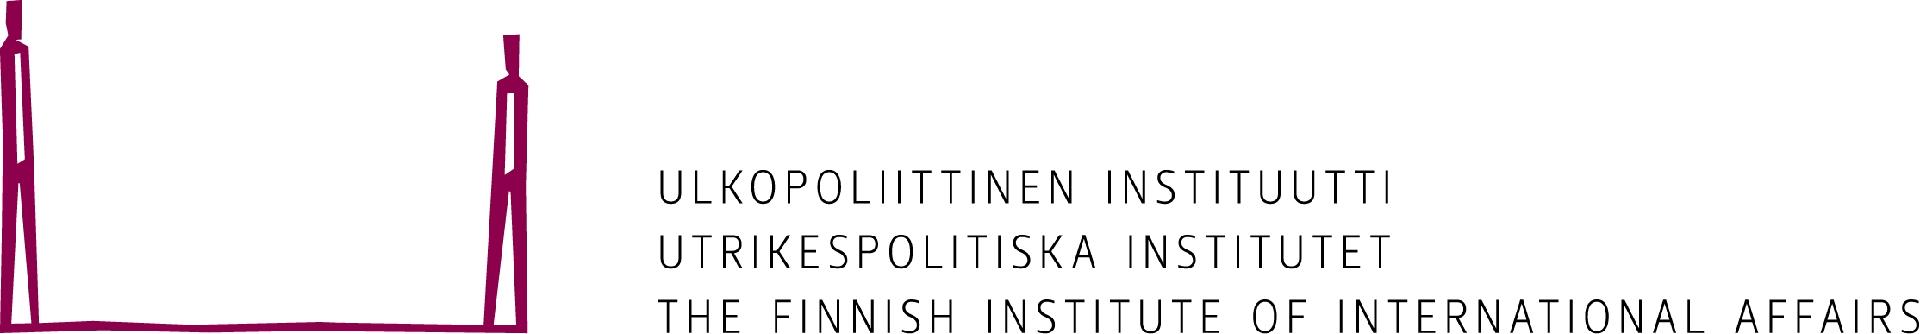 The Finnish Institute of International Affairs v_2